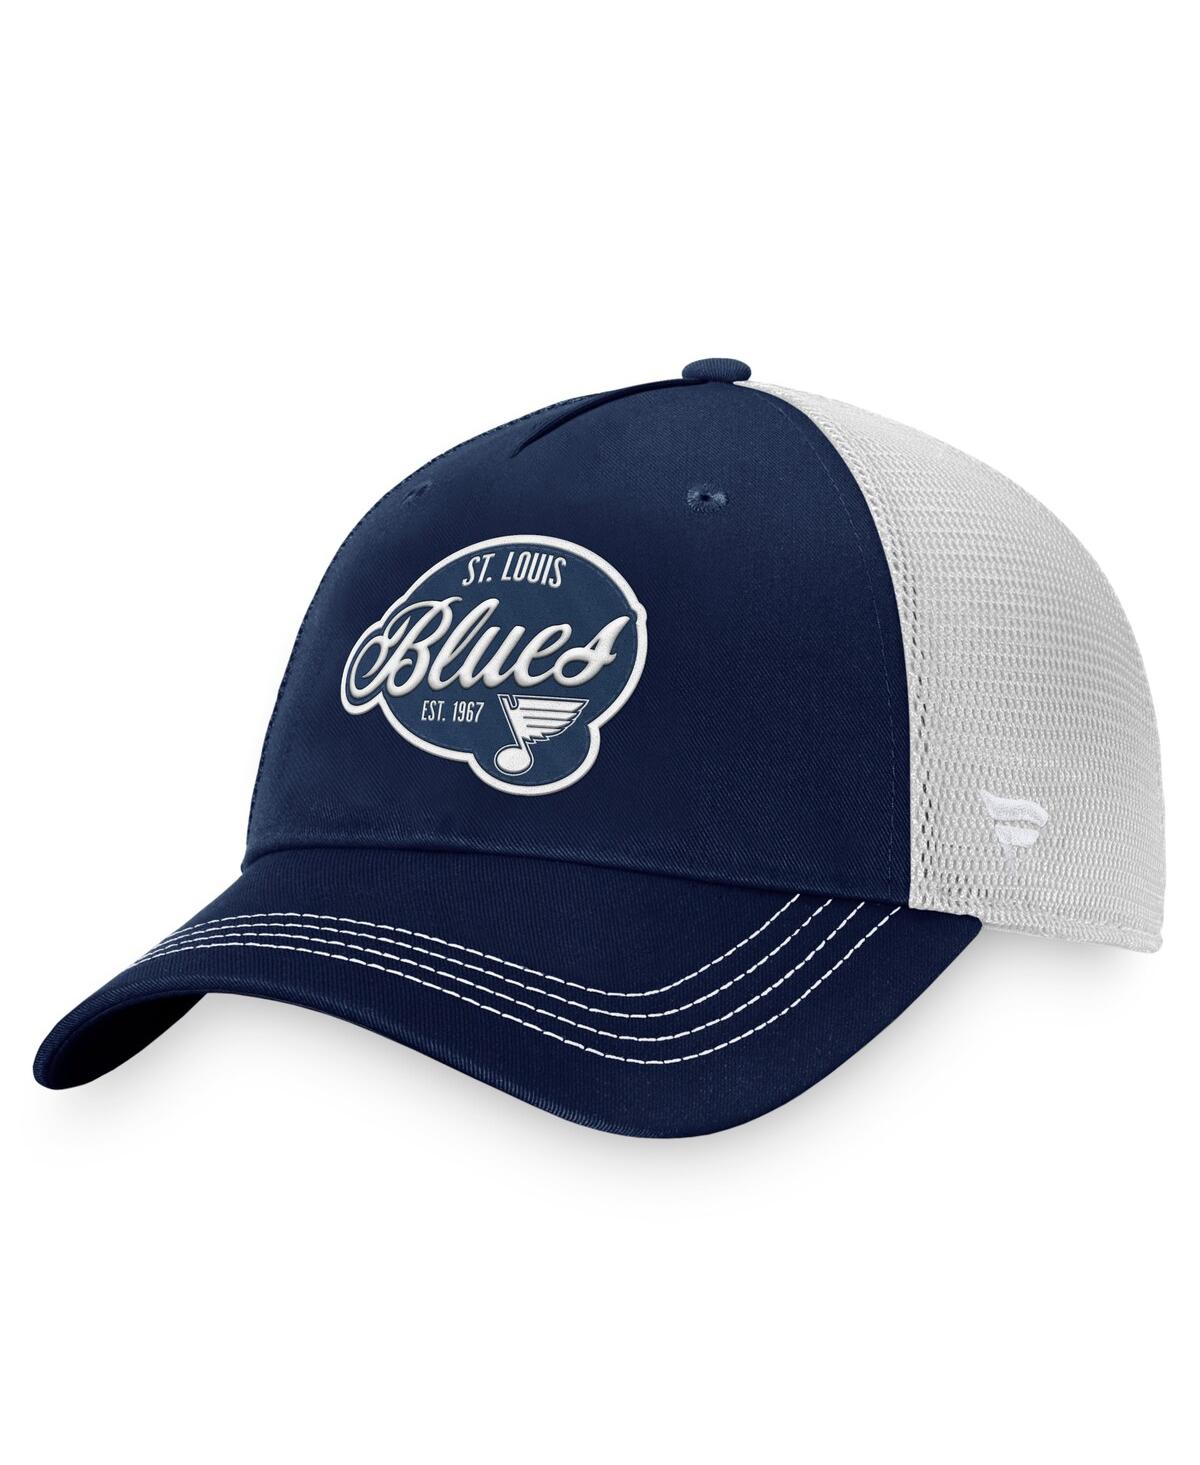 Women's Fanatics Navy, White St. Louis Blues Fundamental Trucker Adjustable Hat - Navy, White